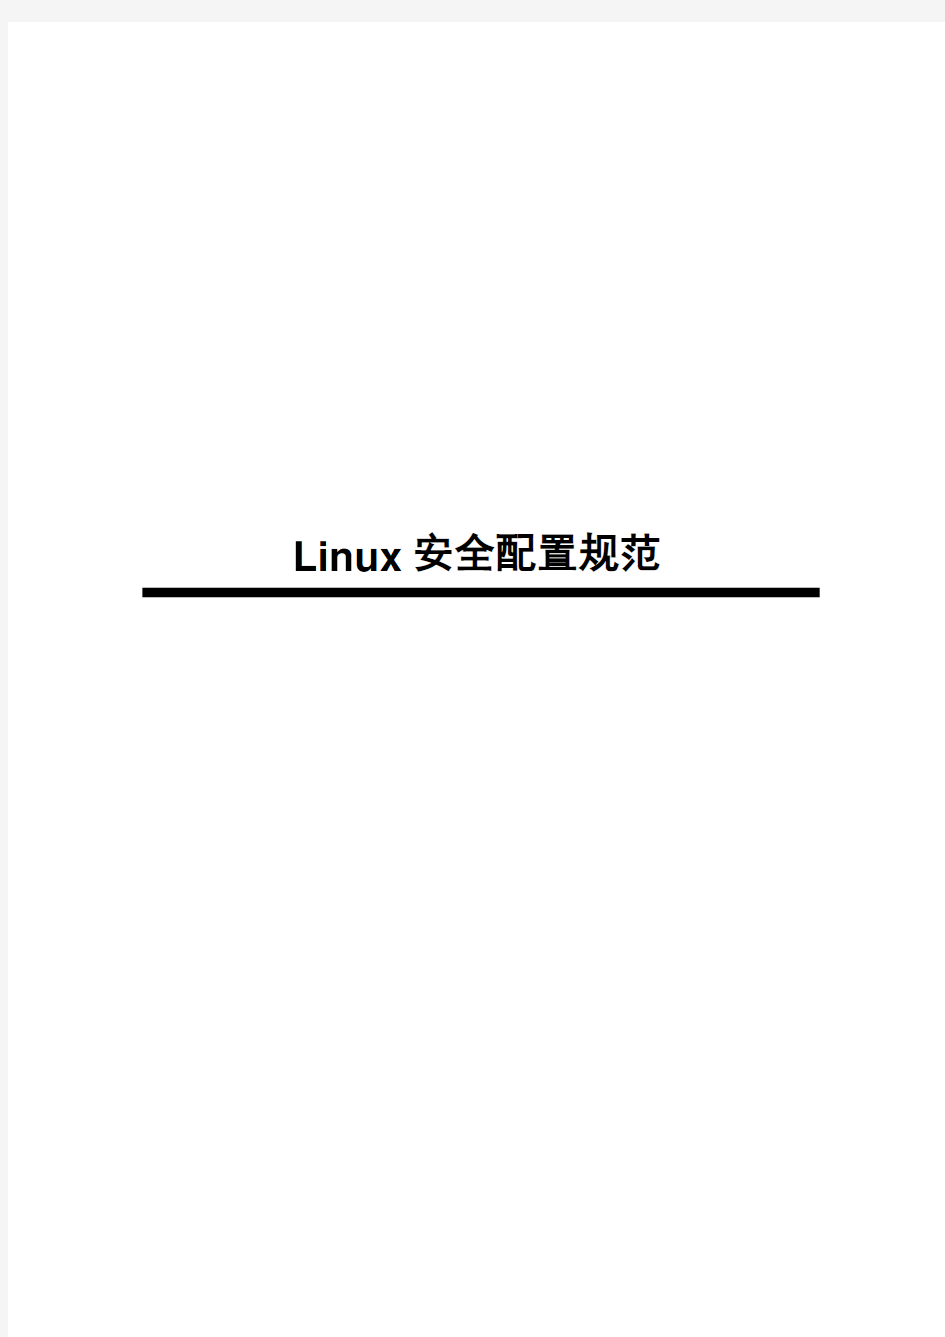 Linux安全配置规范